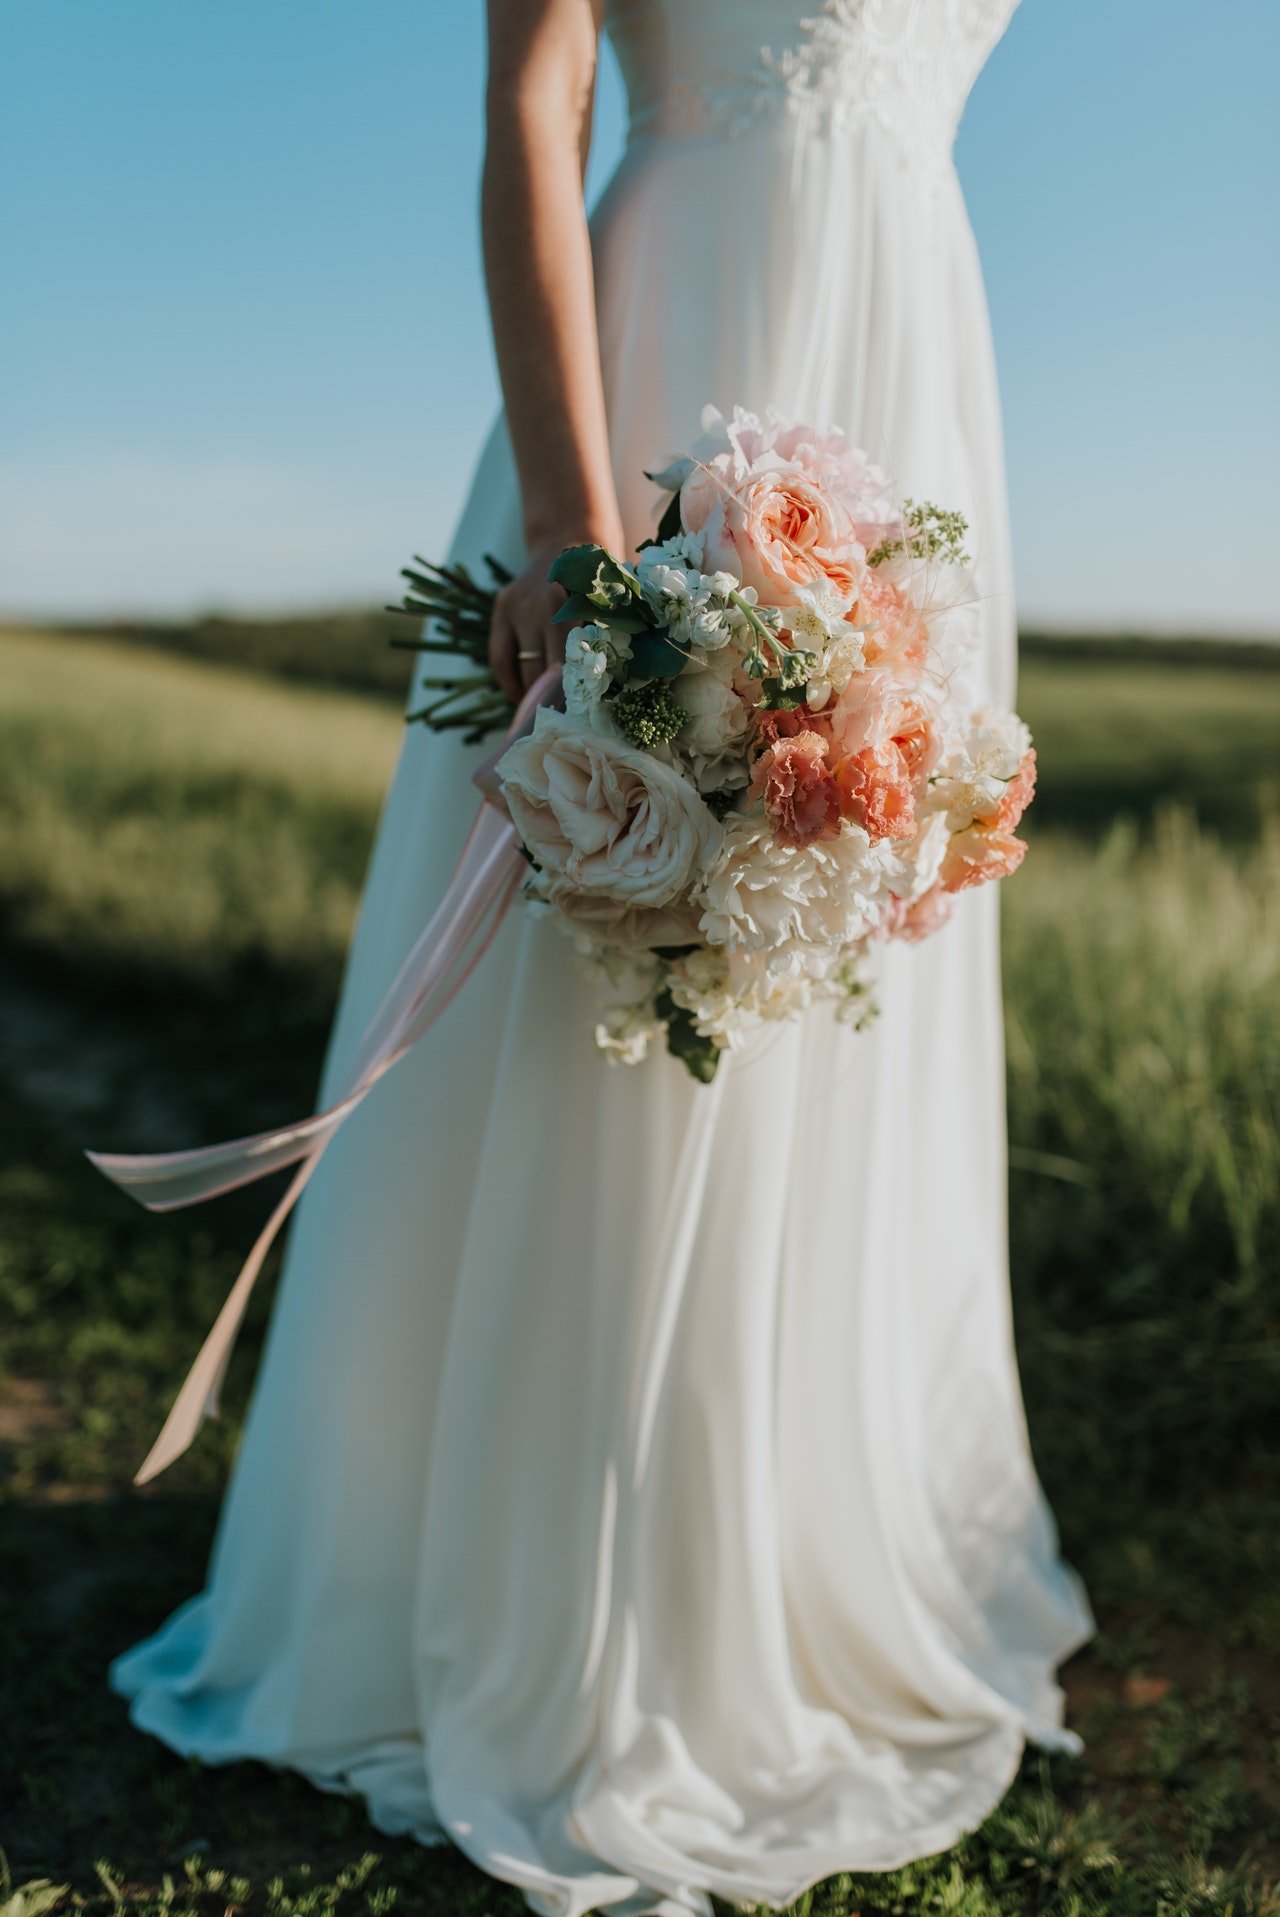 Woman in white wedding dress|Photo: Dmitry Zvolskiy from Pexels